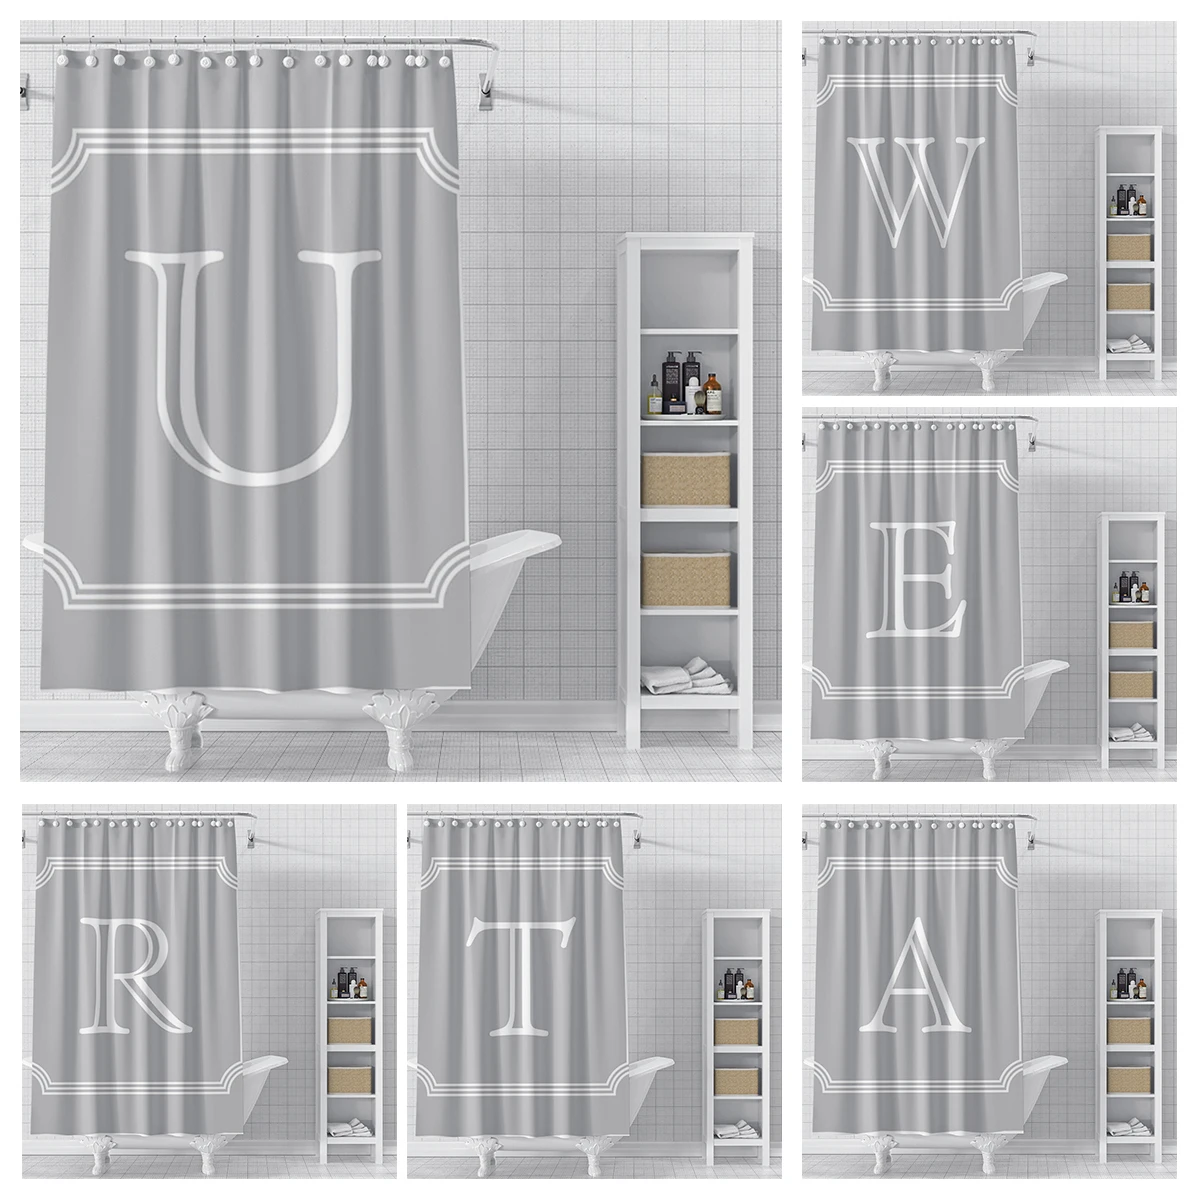 

Home decor 26 letter shower curtains for bathroom waterproof fabric bathroom Curtains modern shower curtain 180x200 240x200